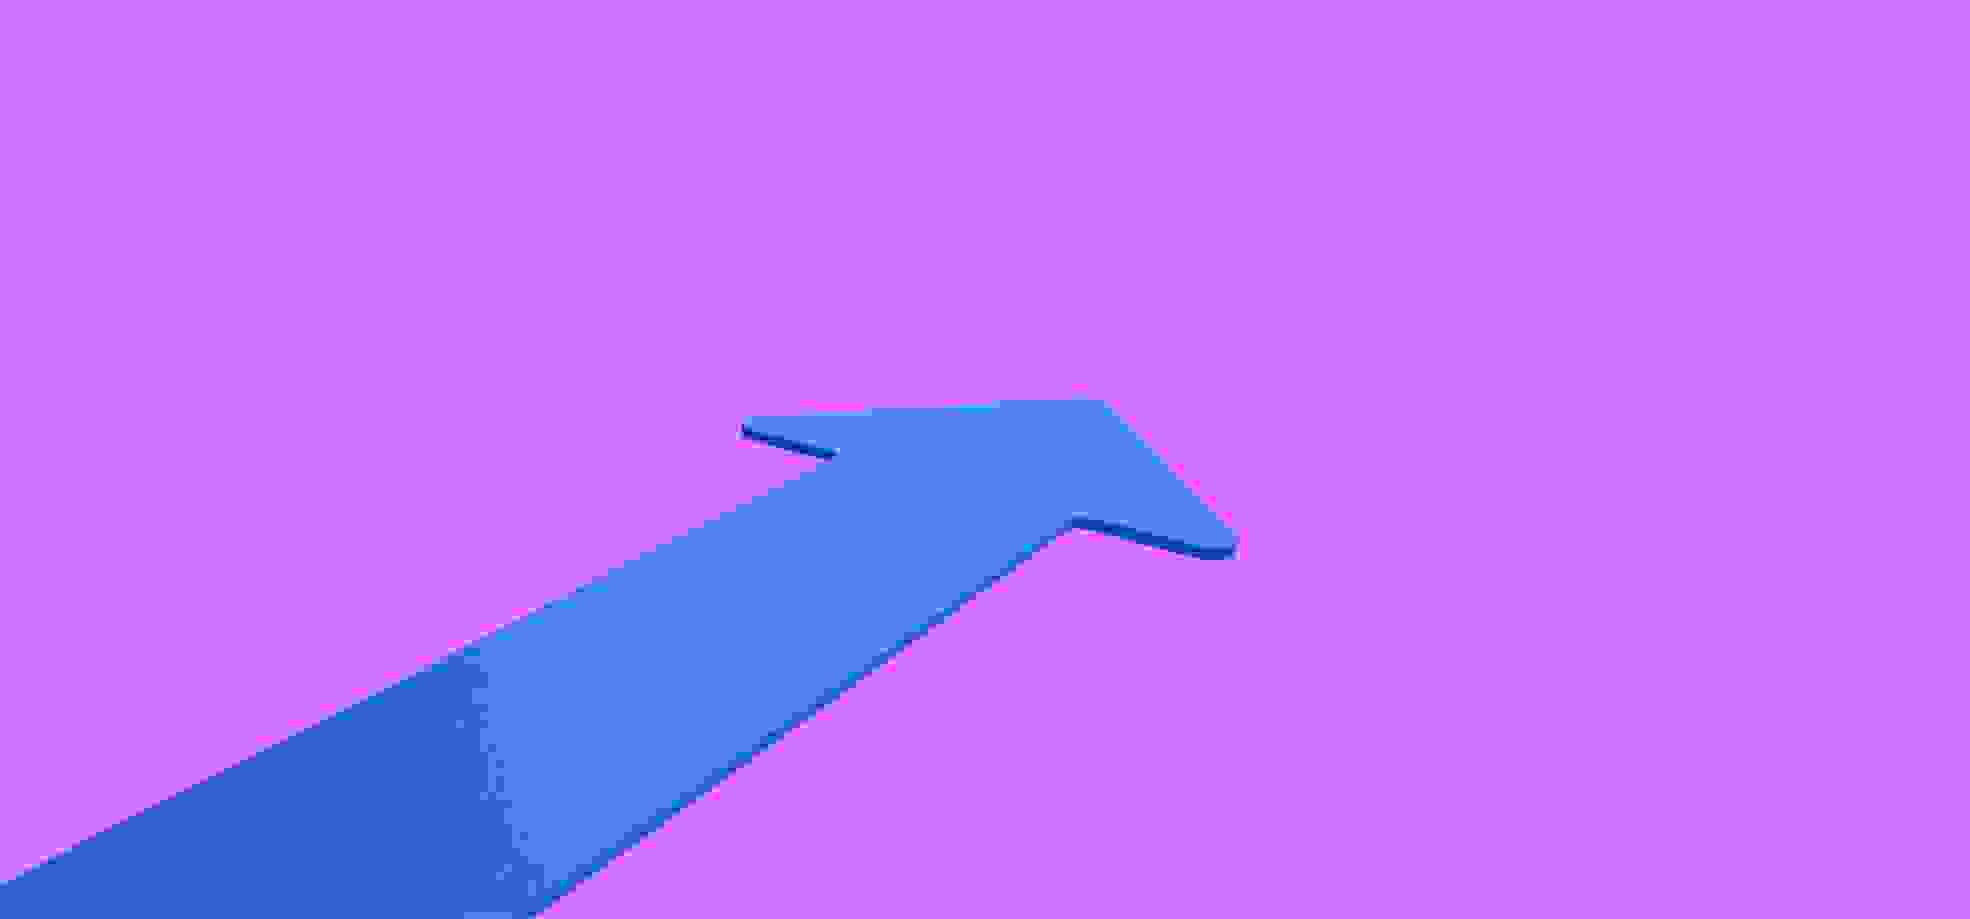 a wide blue arrow on purple background